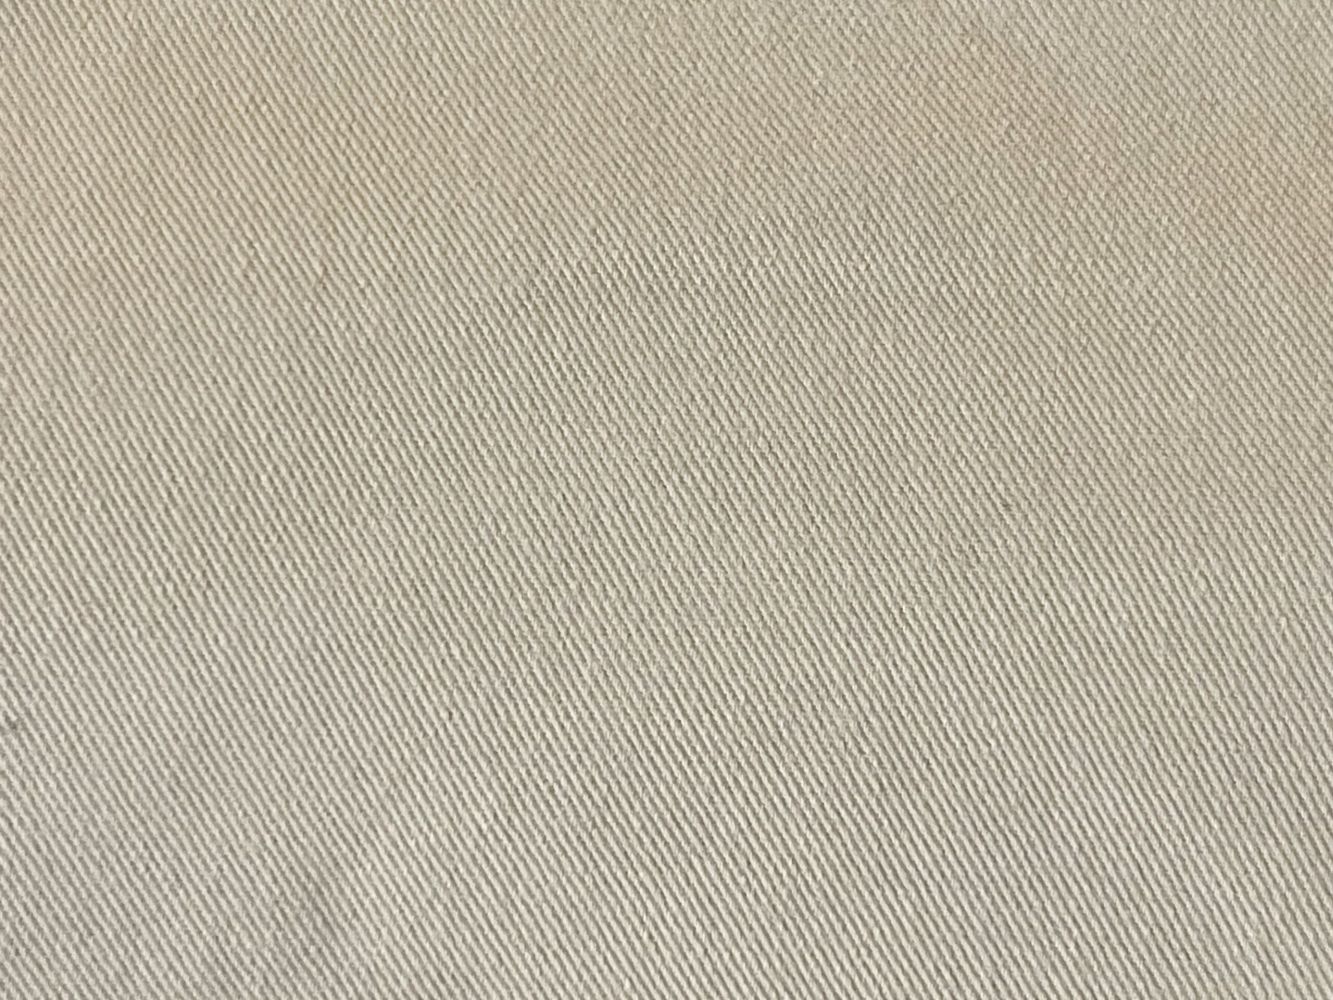 Dockside Oatmeal Tan Solid Cotton Home Decor Fabric |RichTex